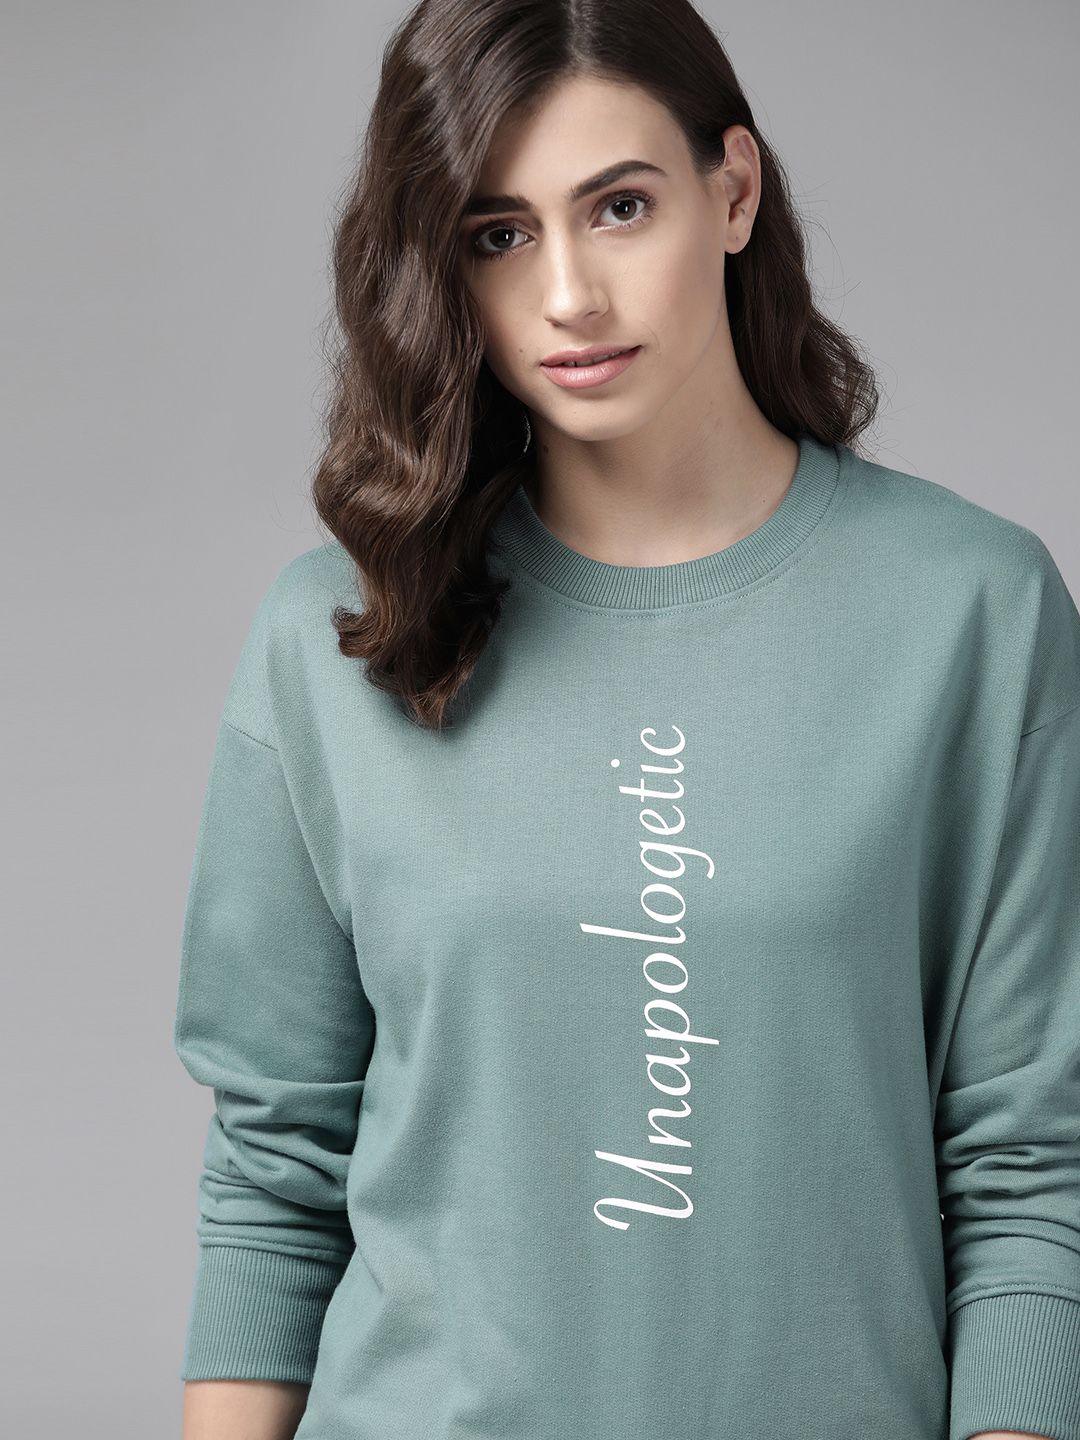 Roadster Women Blue & White Typography Print Sweatshirt Price in India